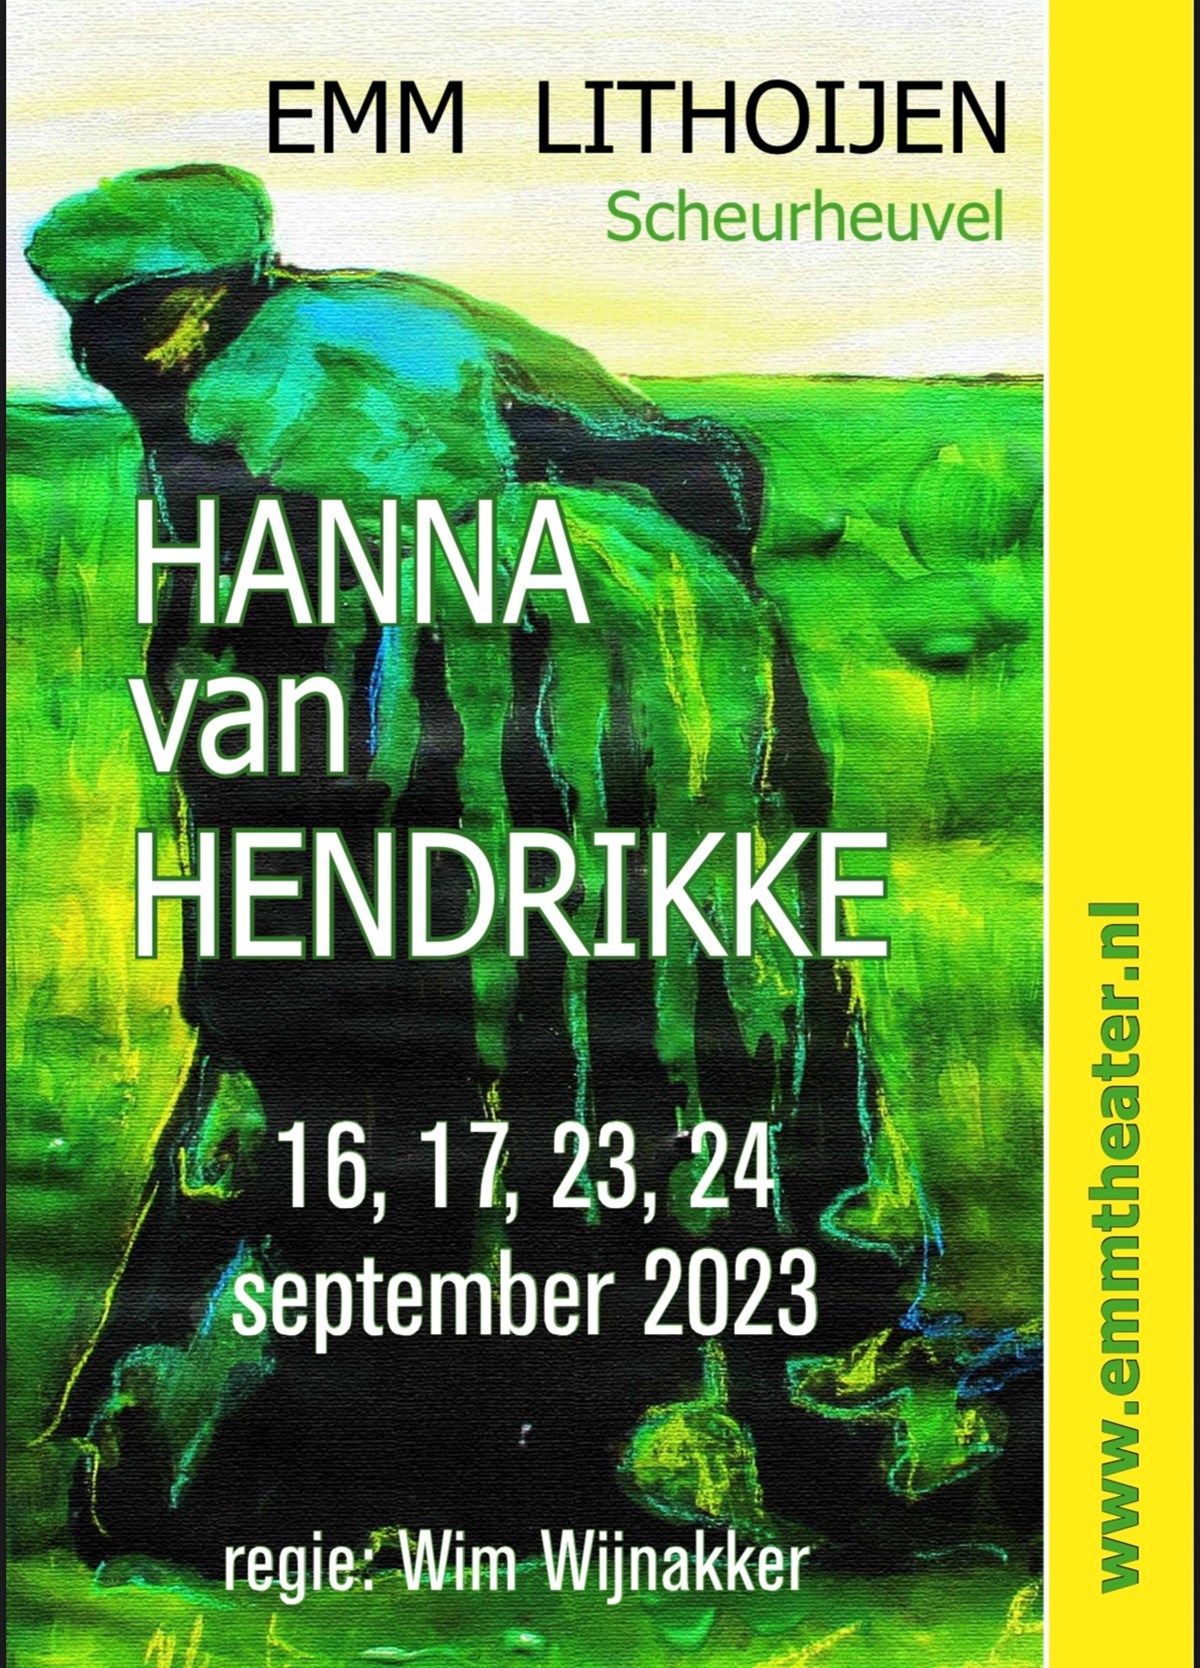 Hanna van Hendrikke